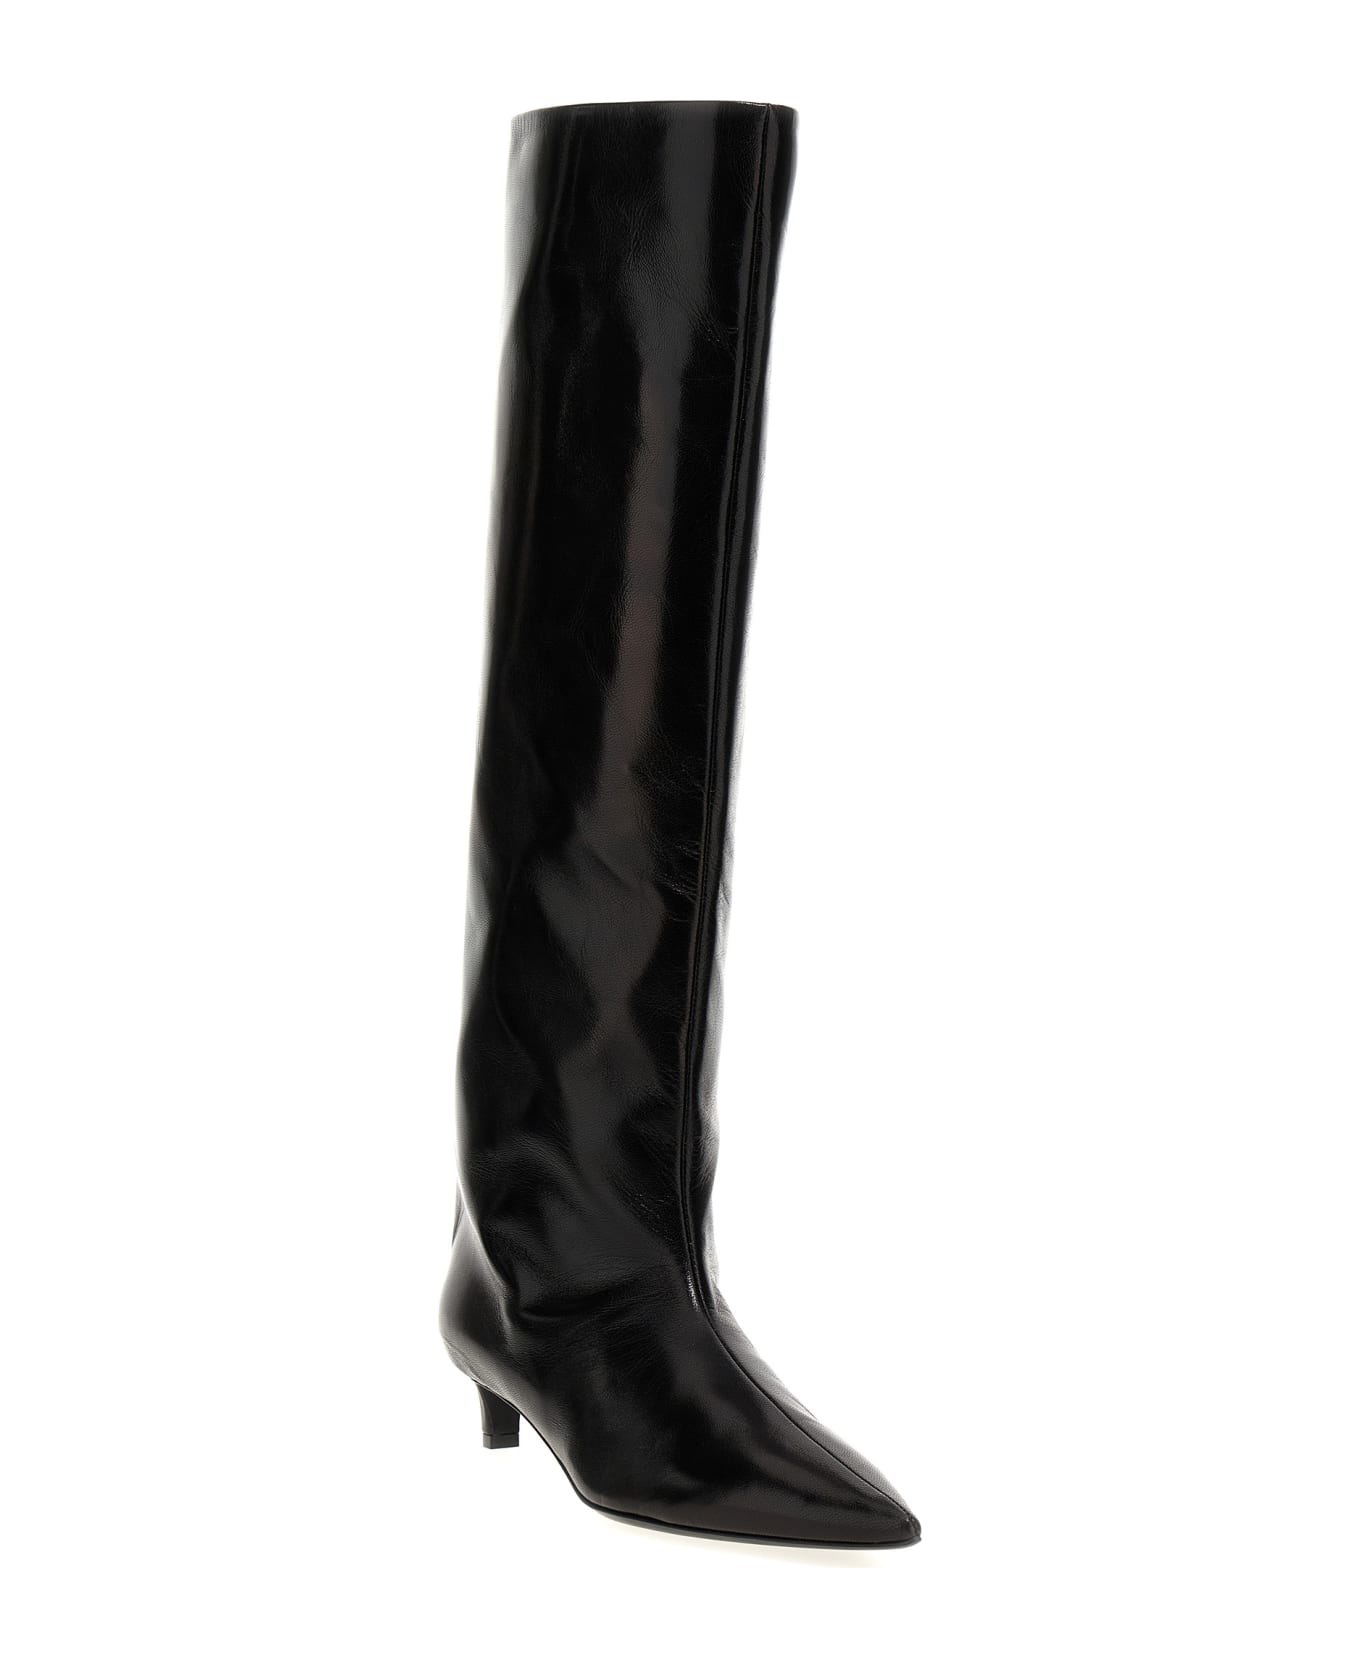 Jil Sander Black Leather Boots - Black ブーツ